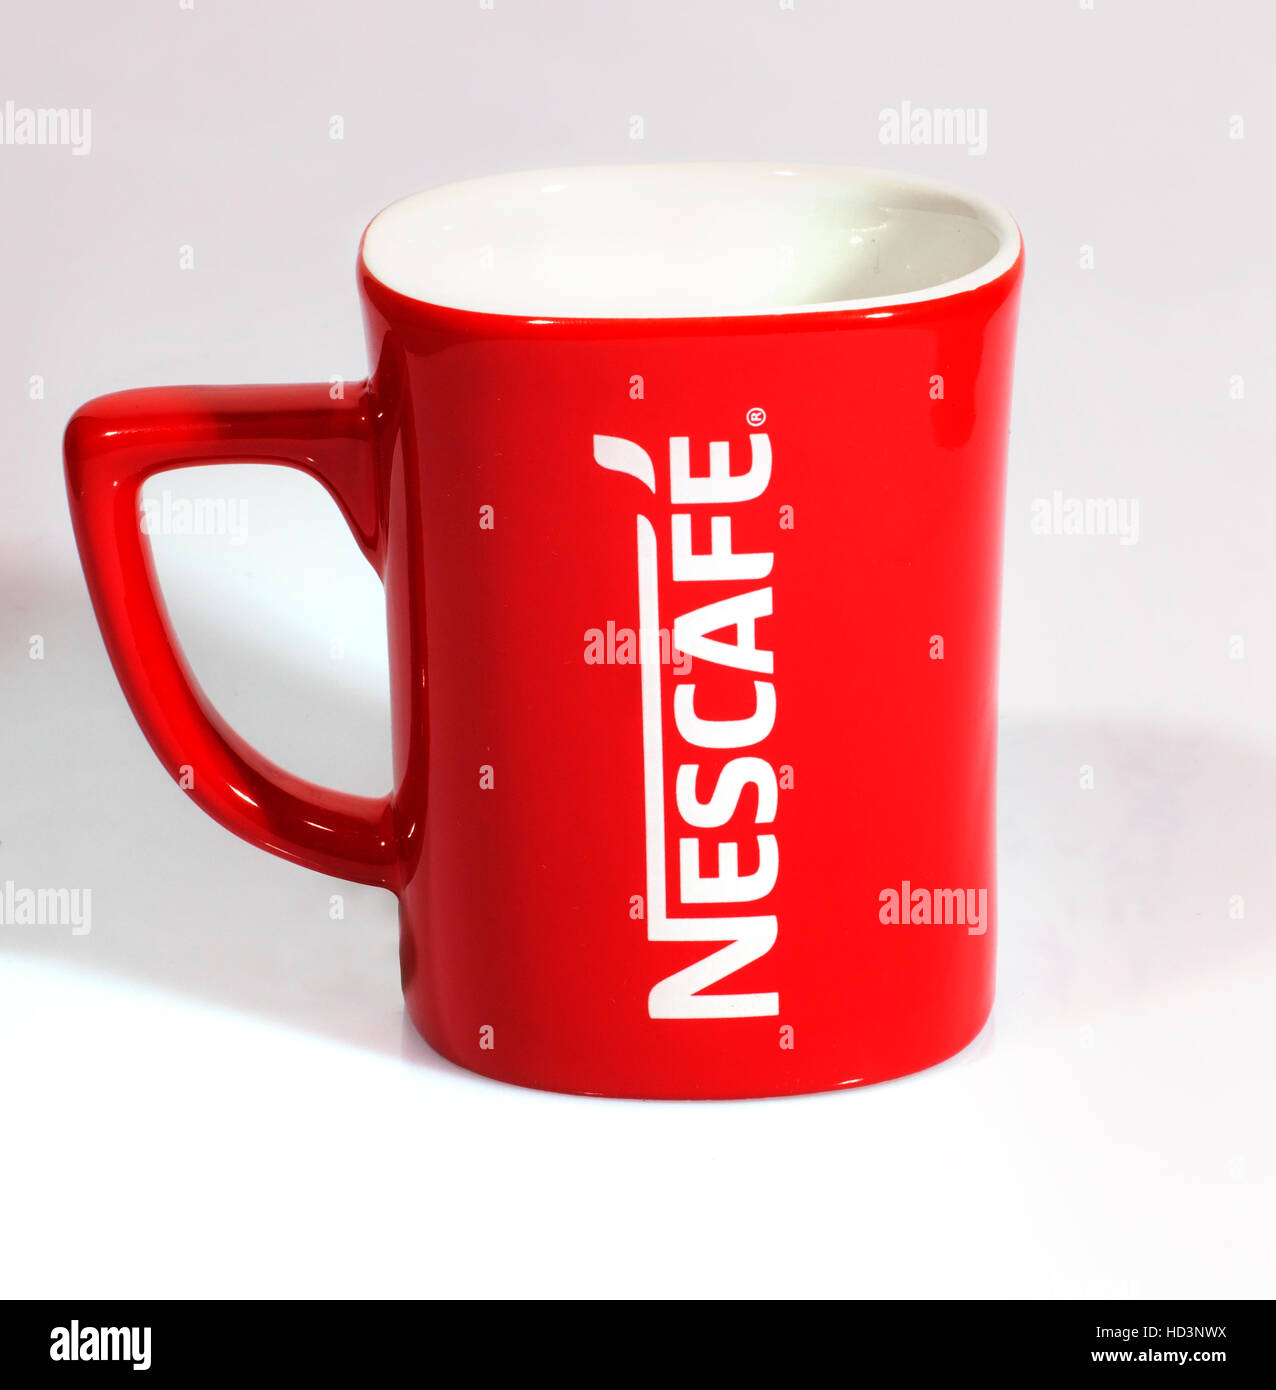 Nescafe mug red mug hi-res stock photography and images - Alamy